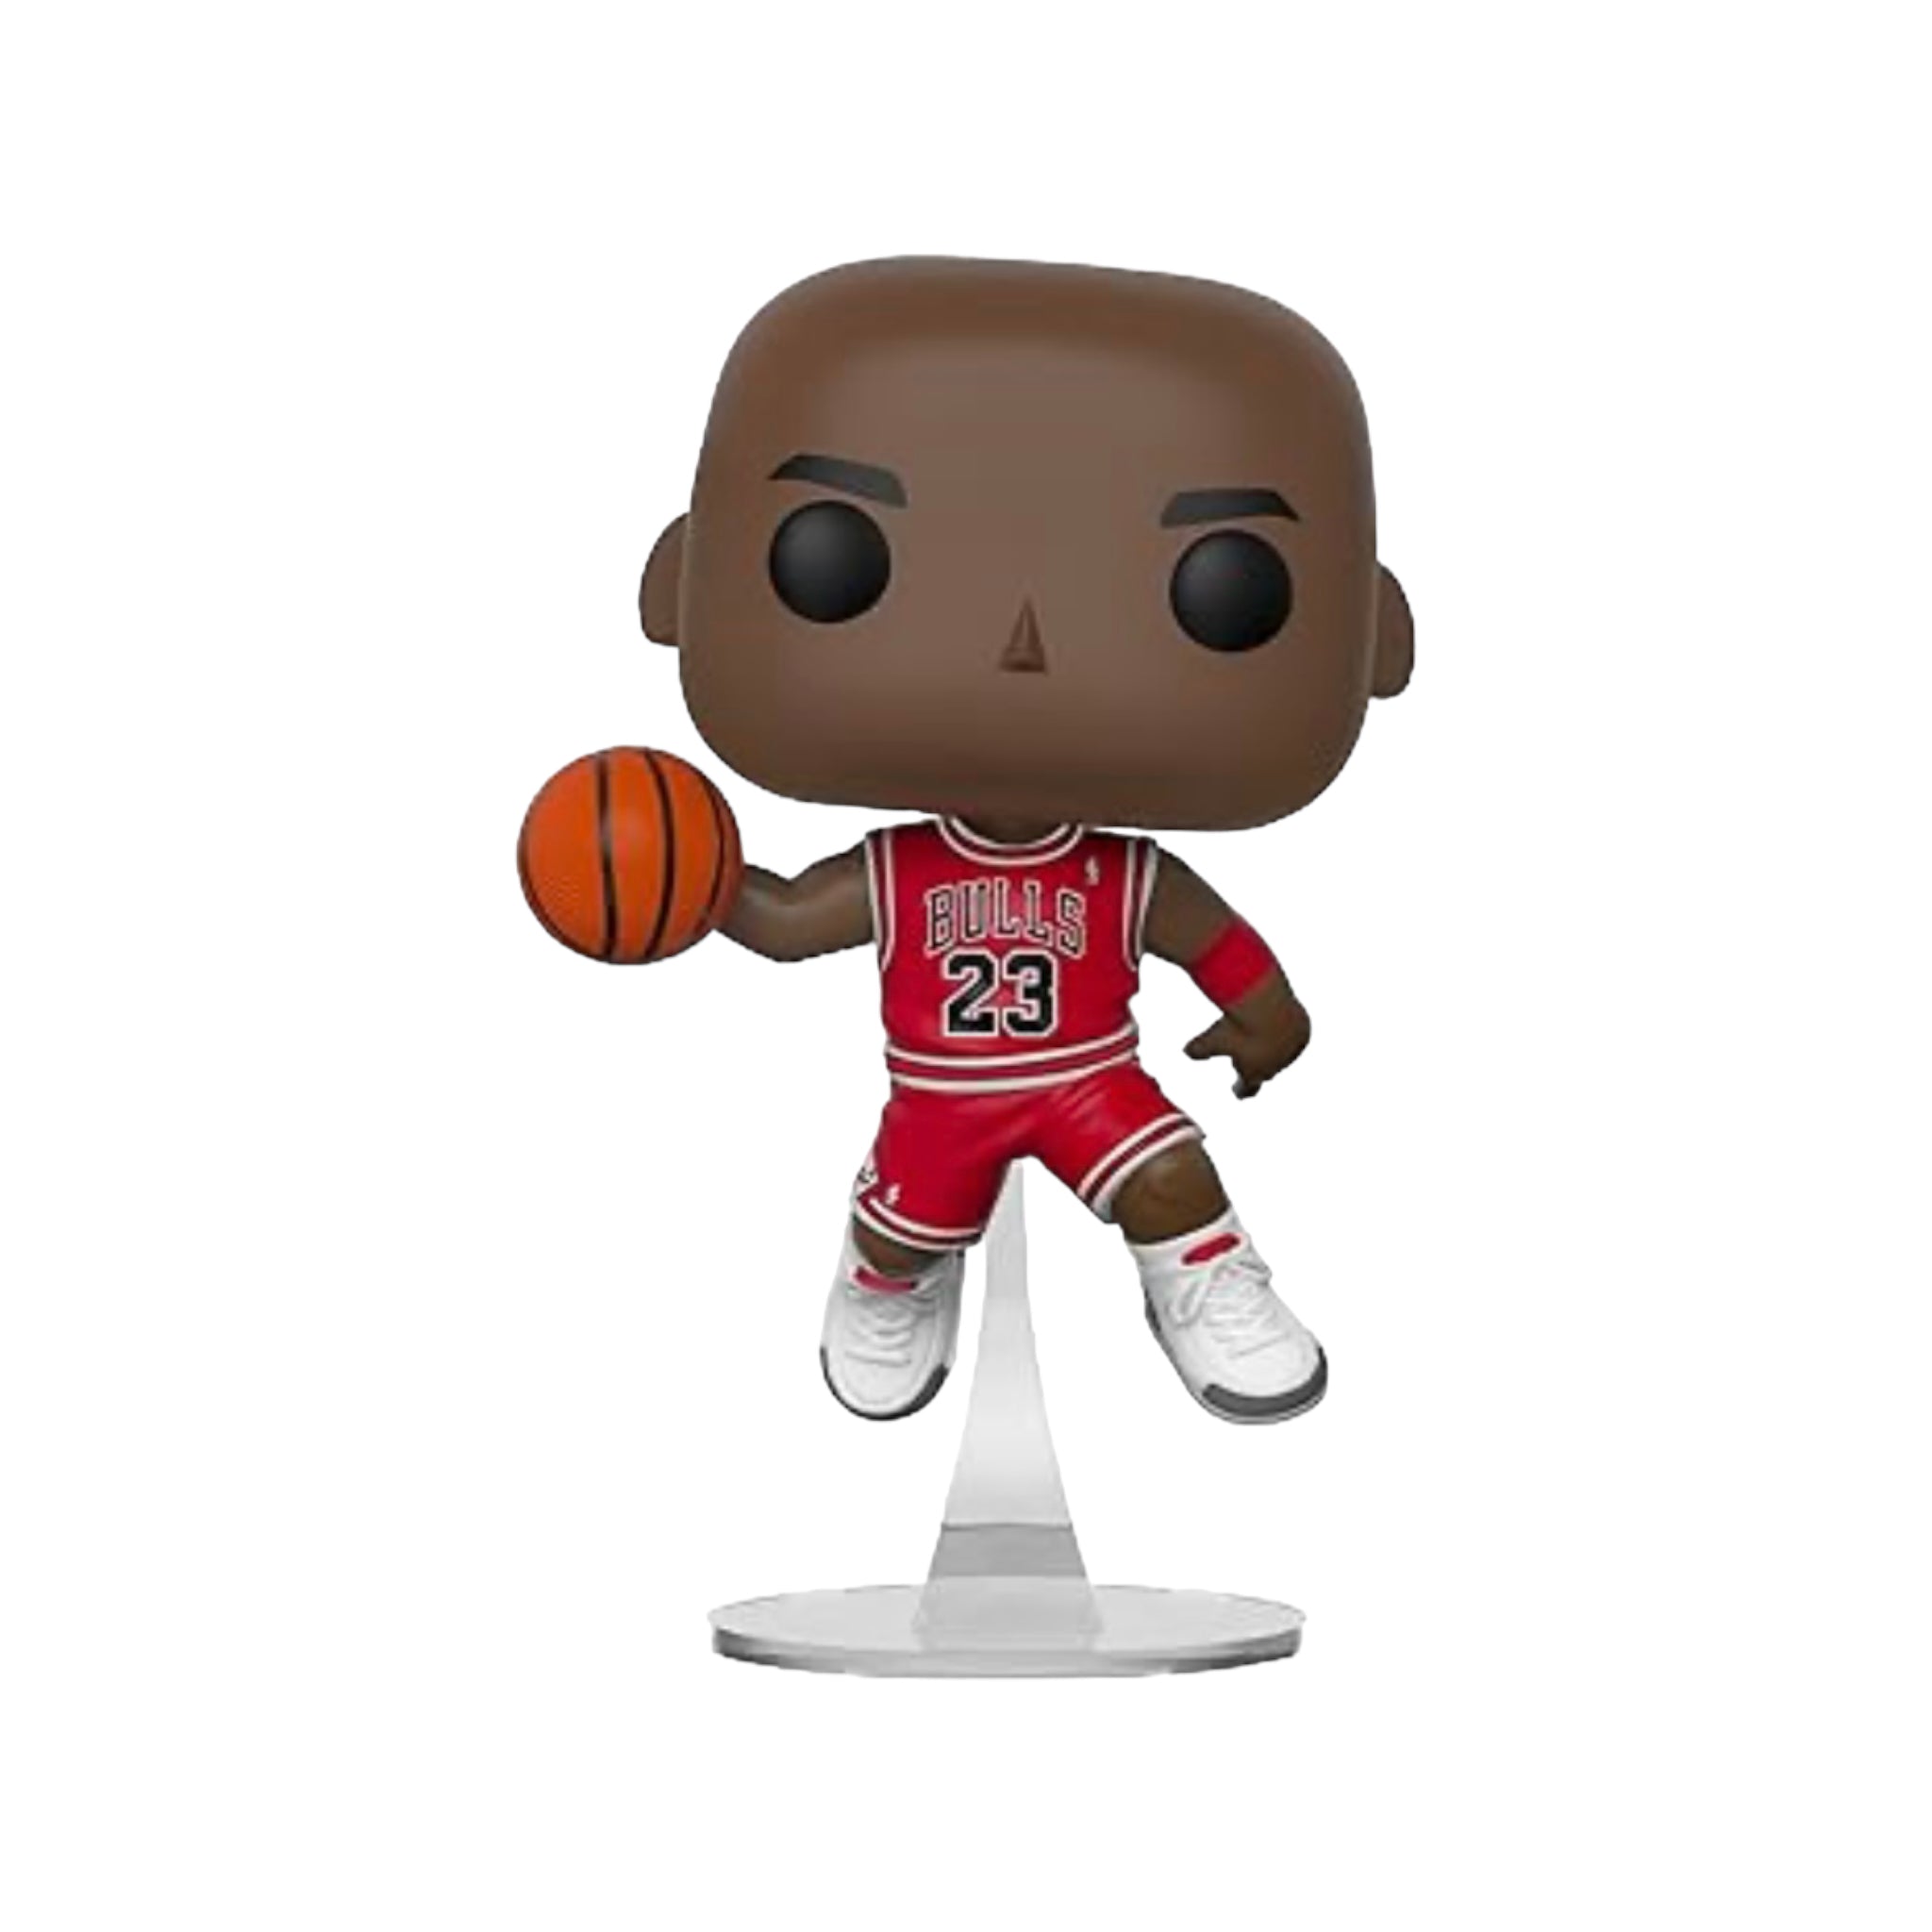 Michael Jordan #54 Funko Pop! - NBA